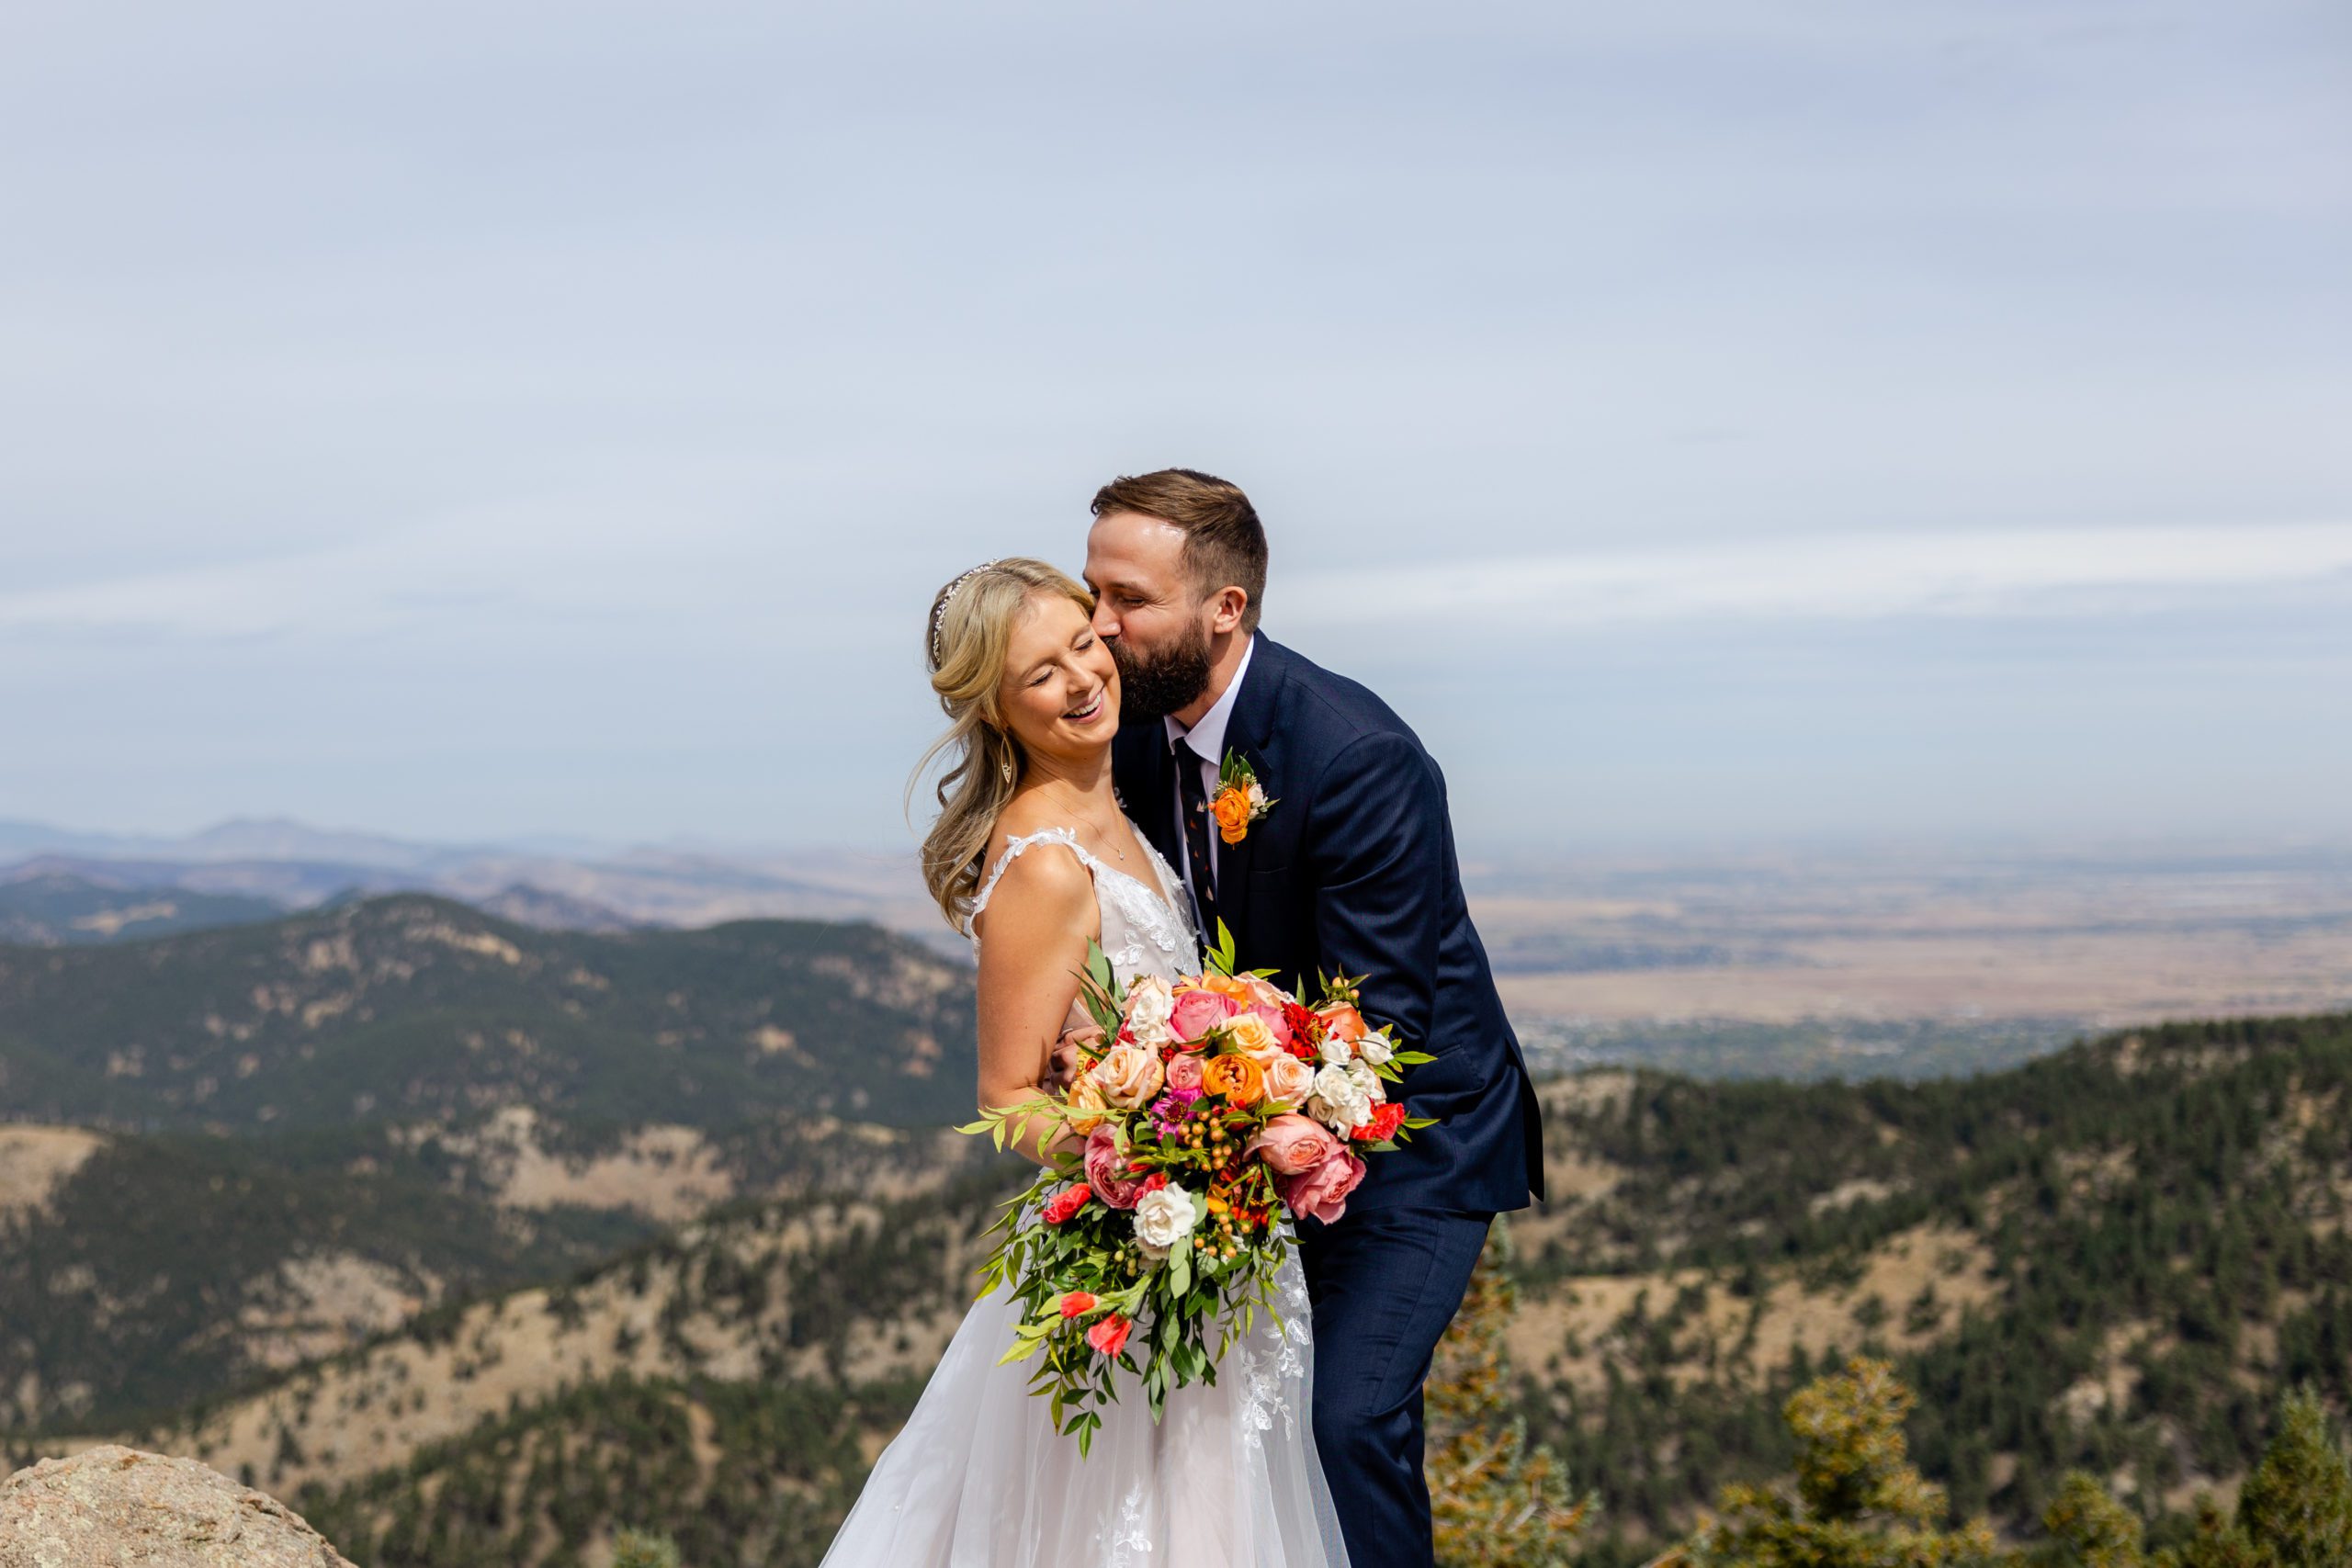 Wedding photos at Lost Gulch Overlook in Boulder Colorado on Flagstaff Mountain in October